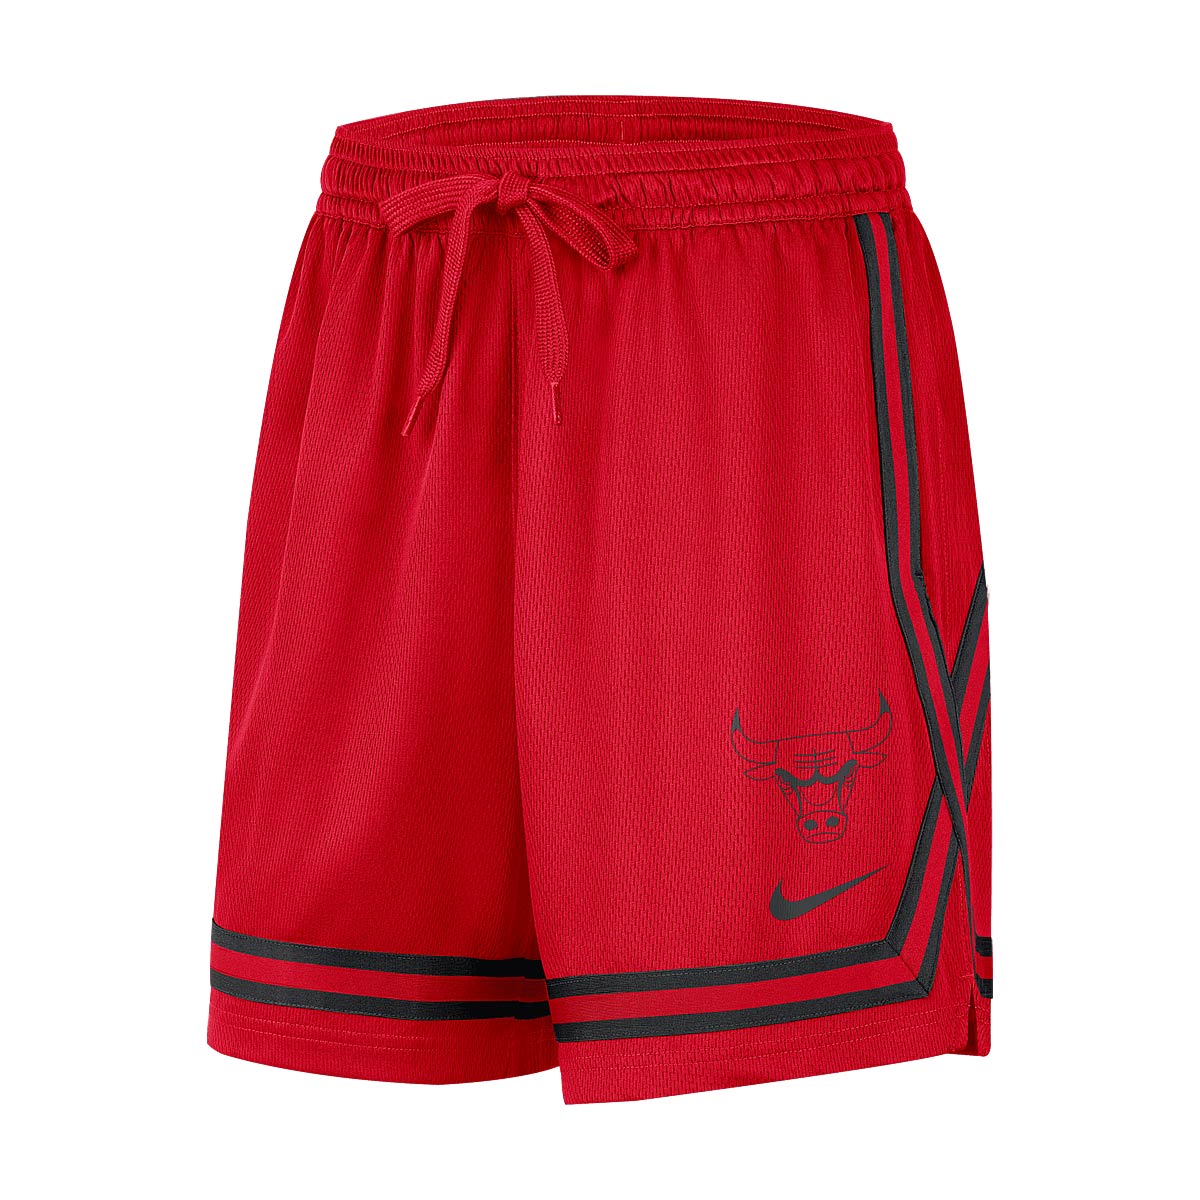 Nike Nba Chicago Bulls Dri-Fit Short Xvr Cts W, University Red/Black/University Red